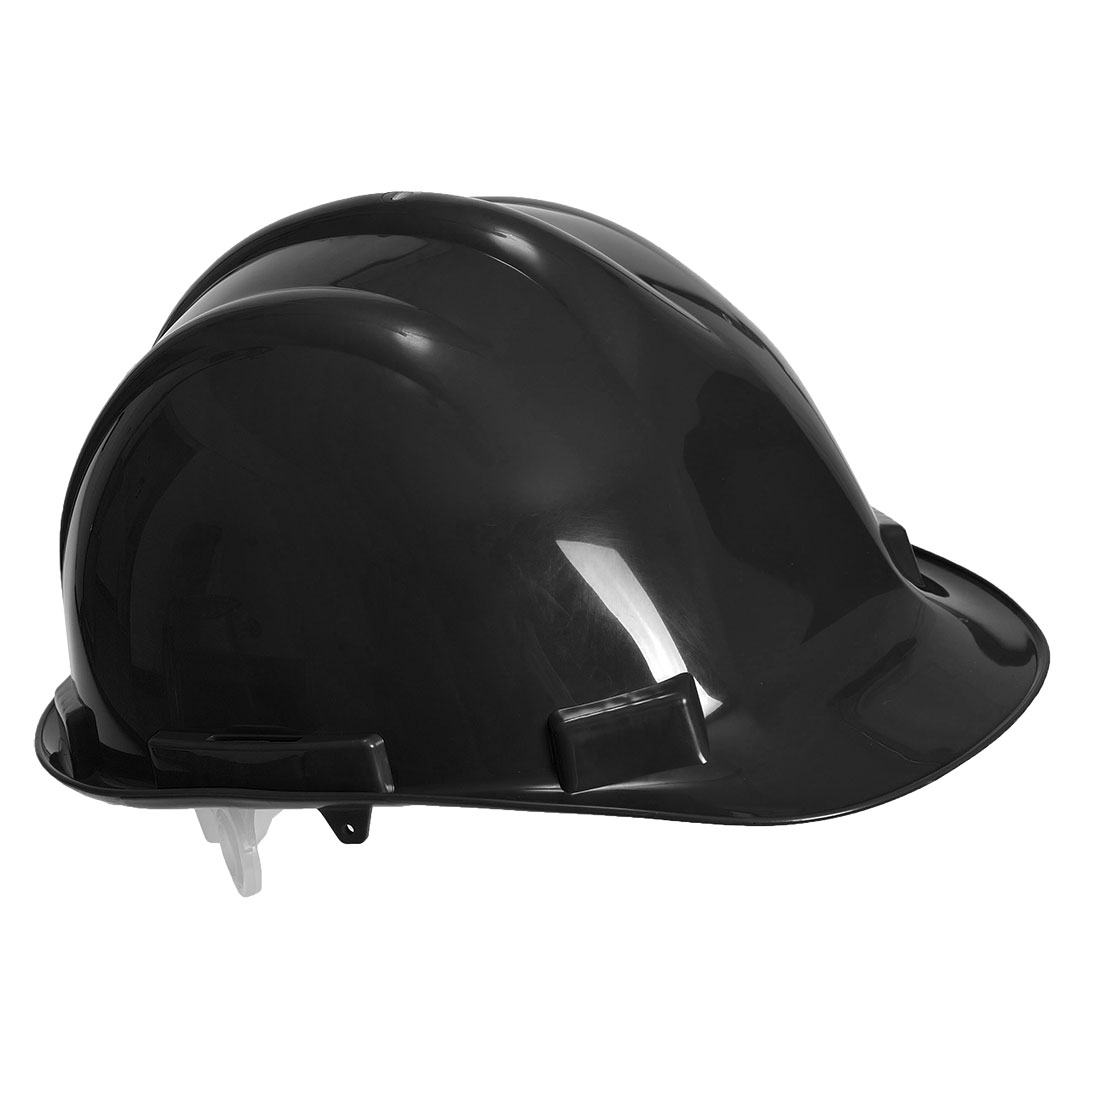 PW50 Expert Base Safety Helmet